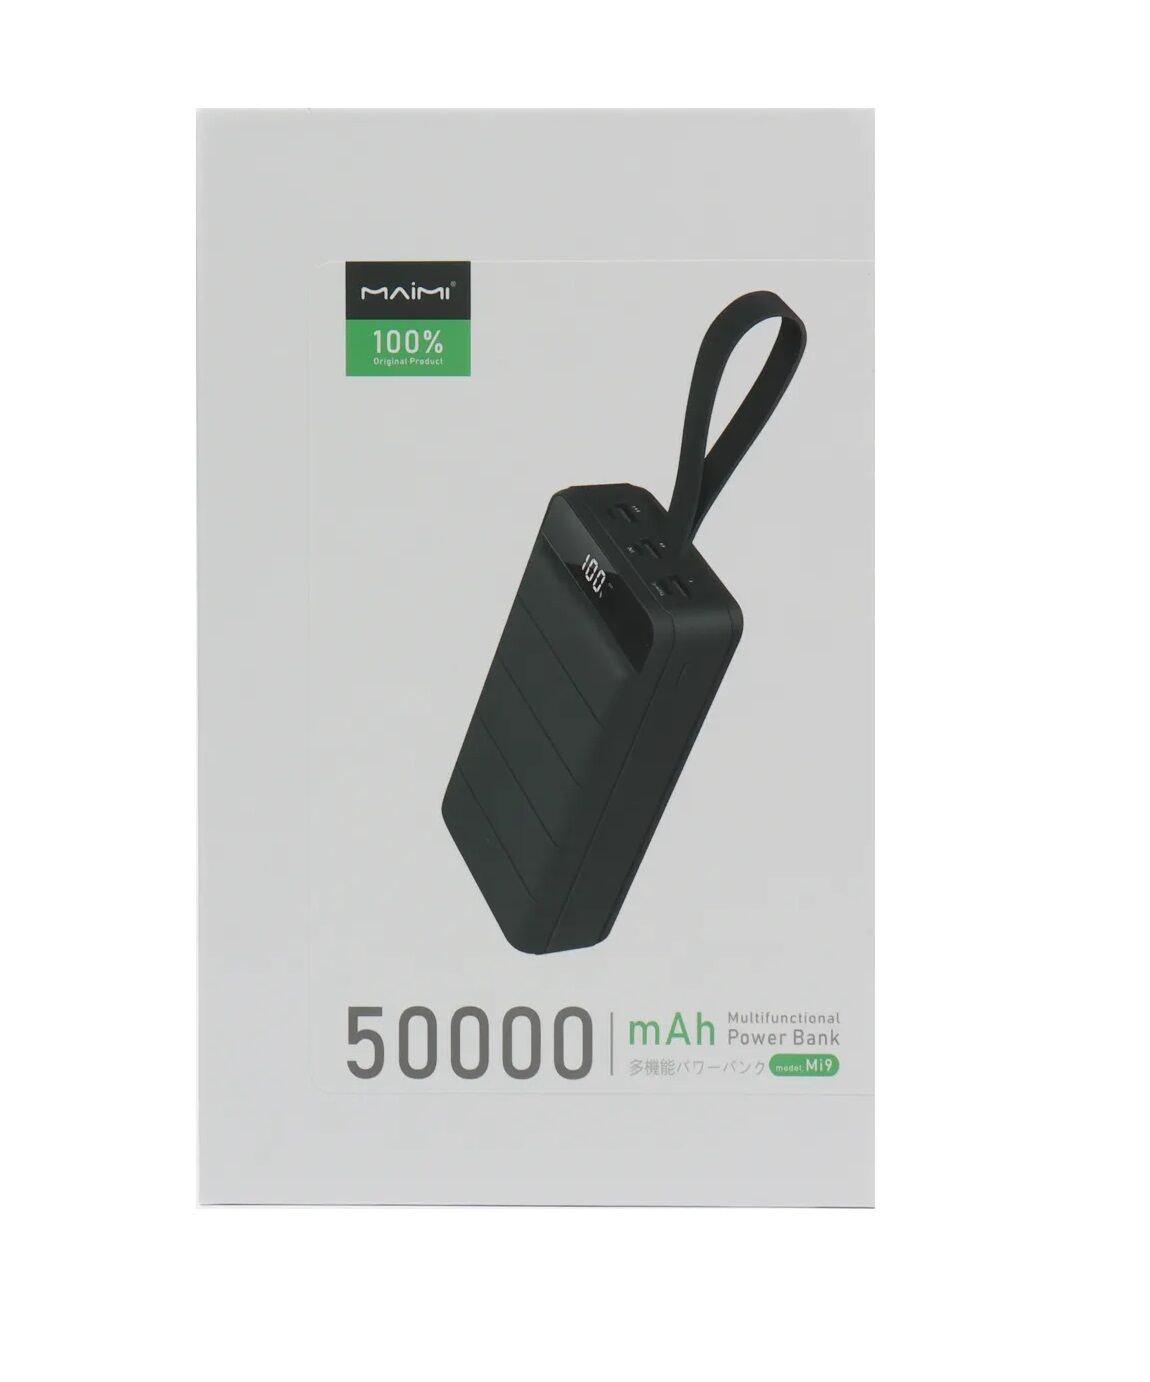 Портативный аккумулятор 50000mAh 3гн.USB, Type-C 5V, 2.1А, чёрный "Maimi" Mi9 1